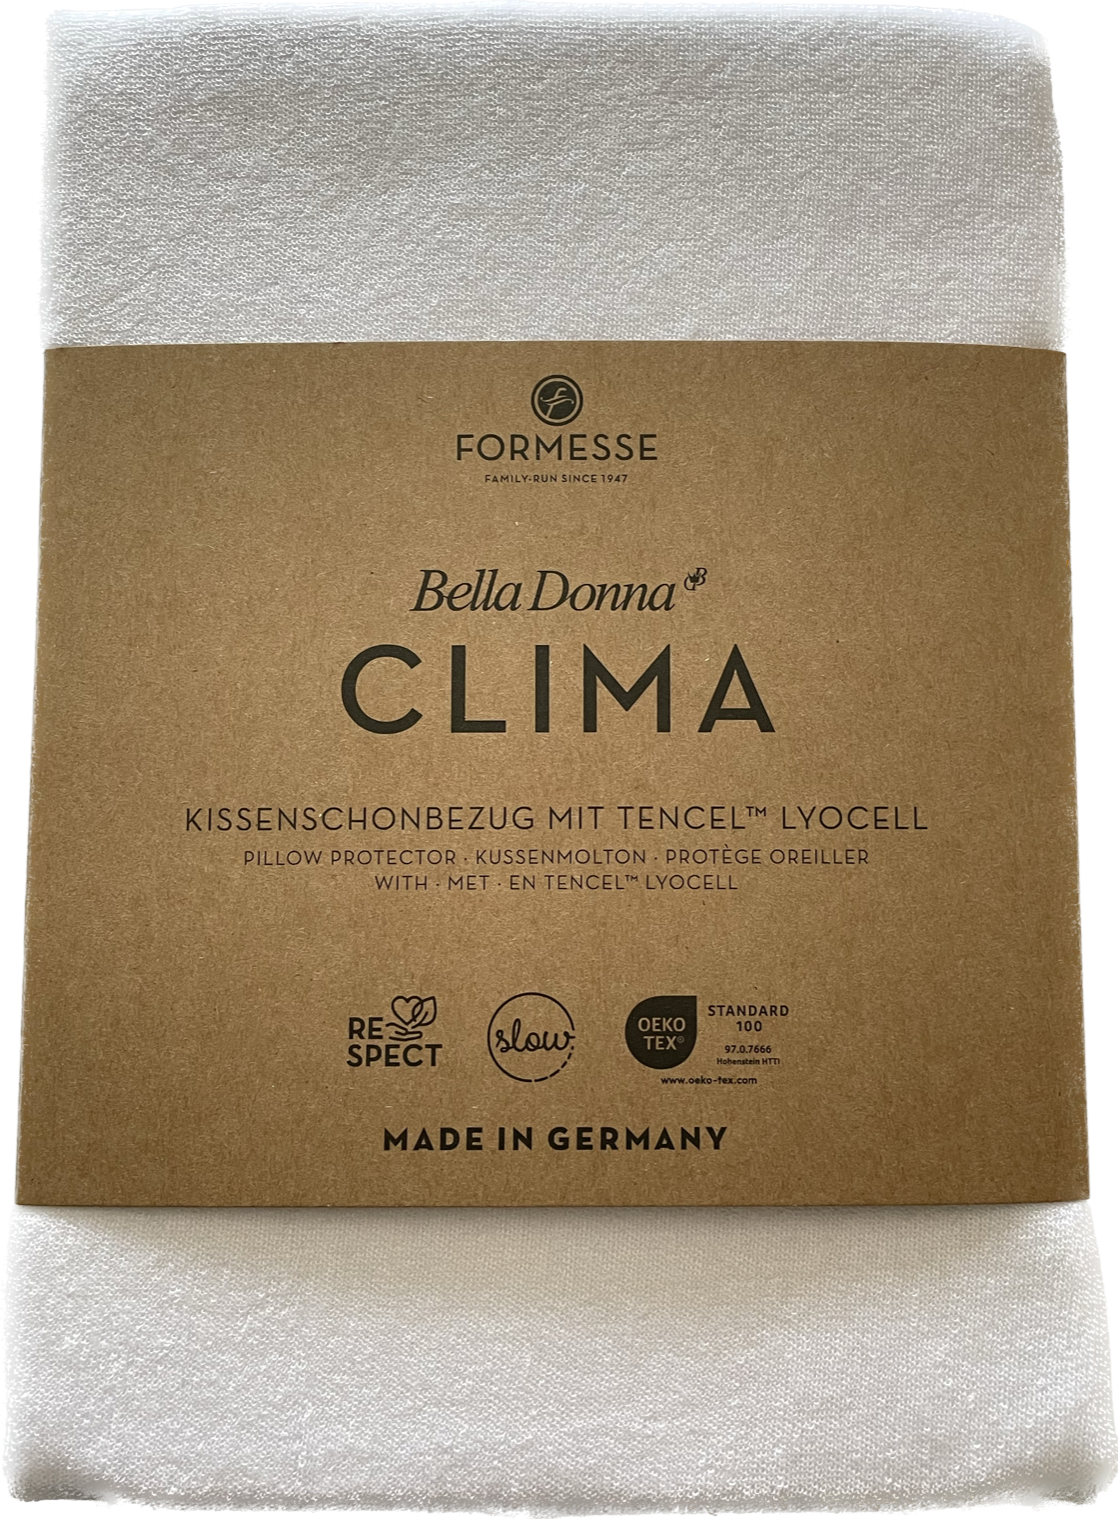 Neu Formesse Bella Donna Clima Kissenschonbezug mit Tencel 80x80 cm oeko-tex